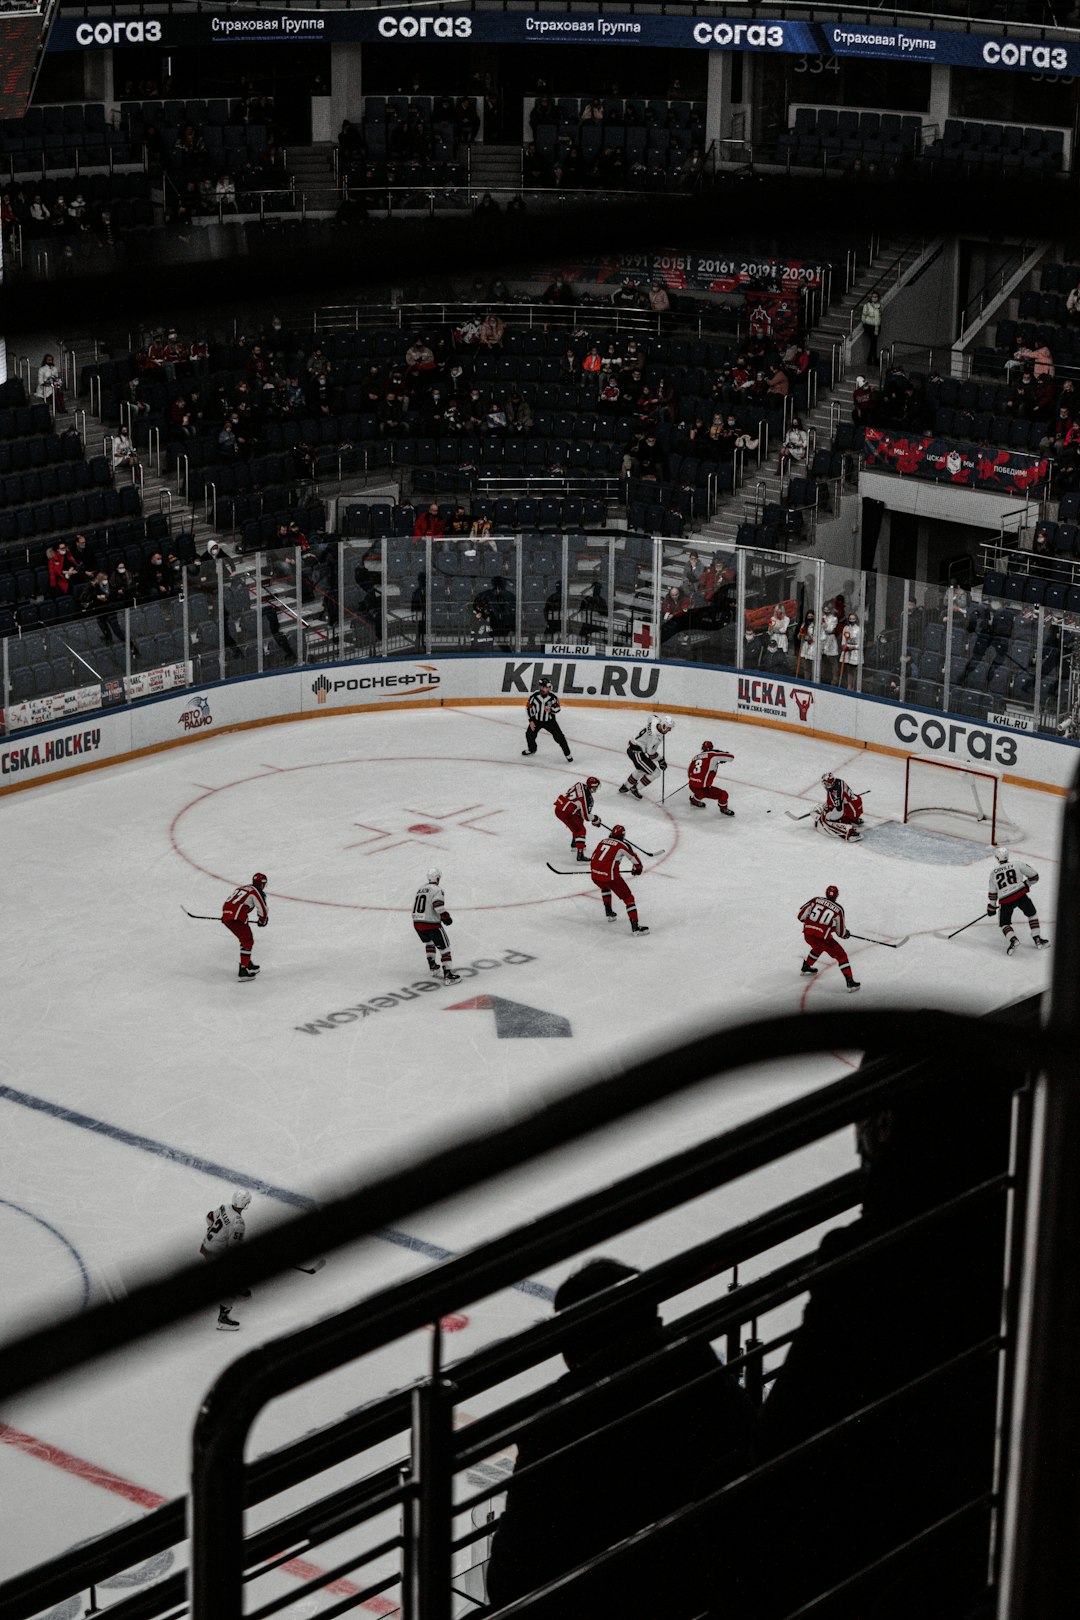 people playing ice hockey on ice stadium